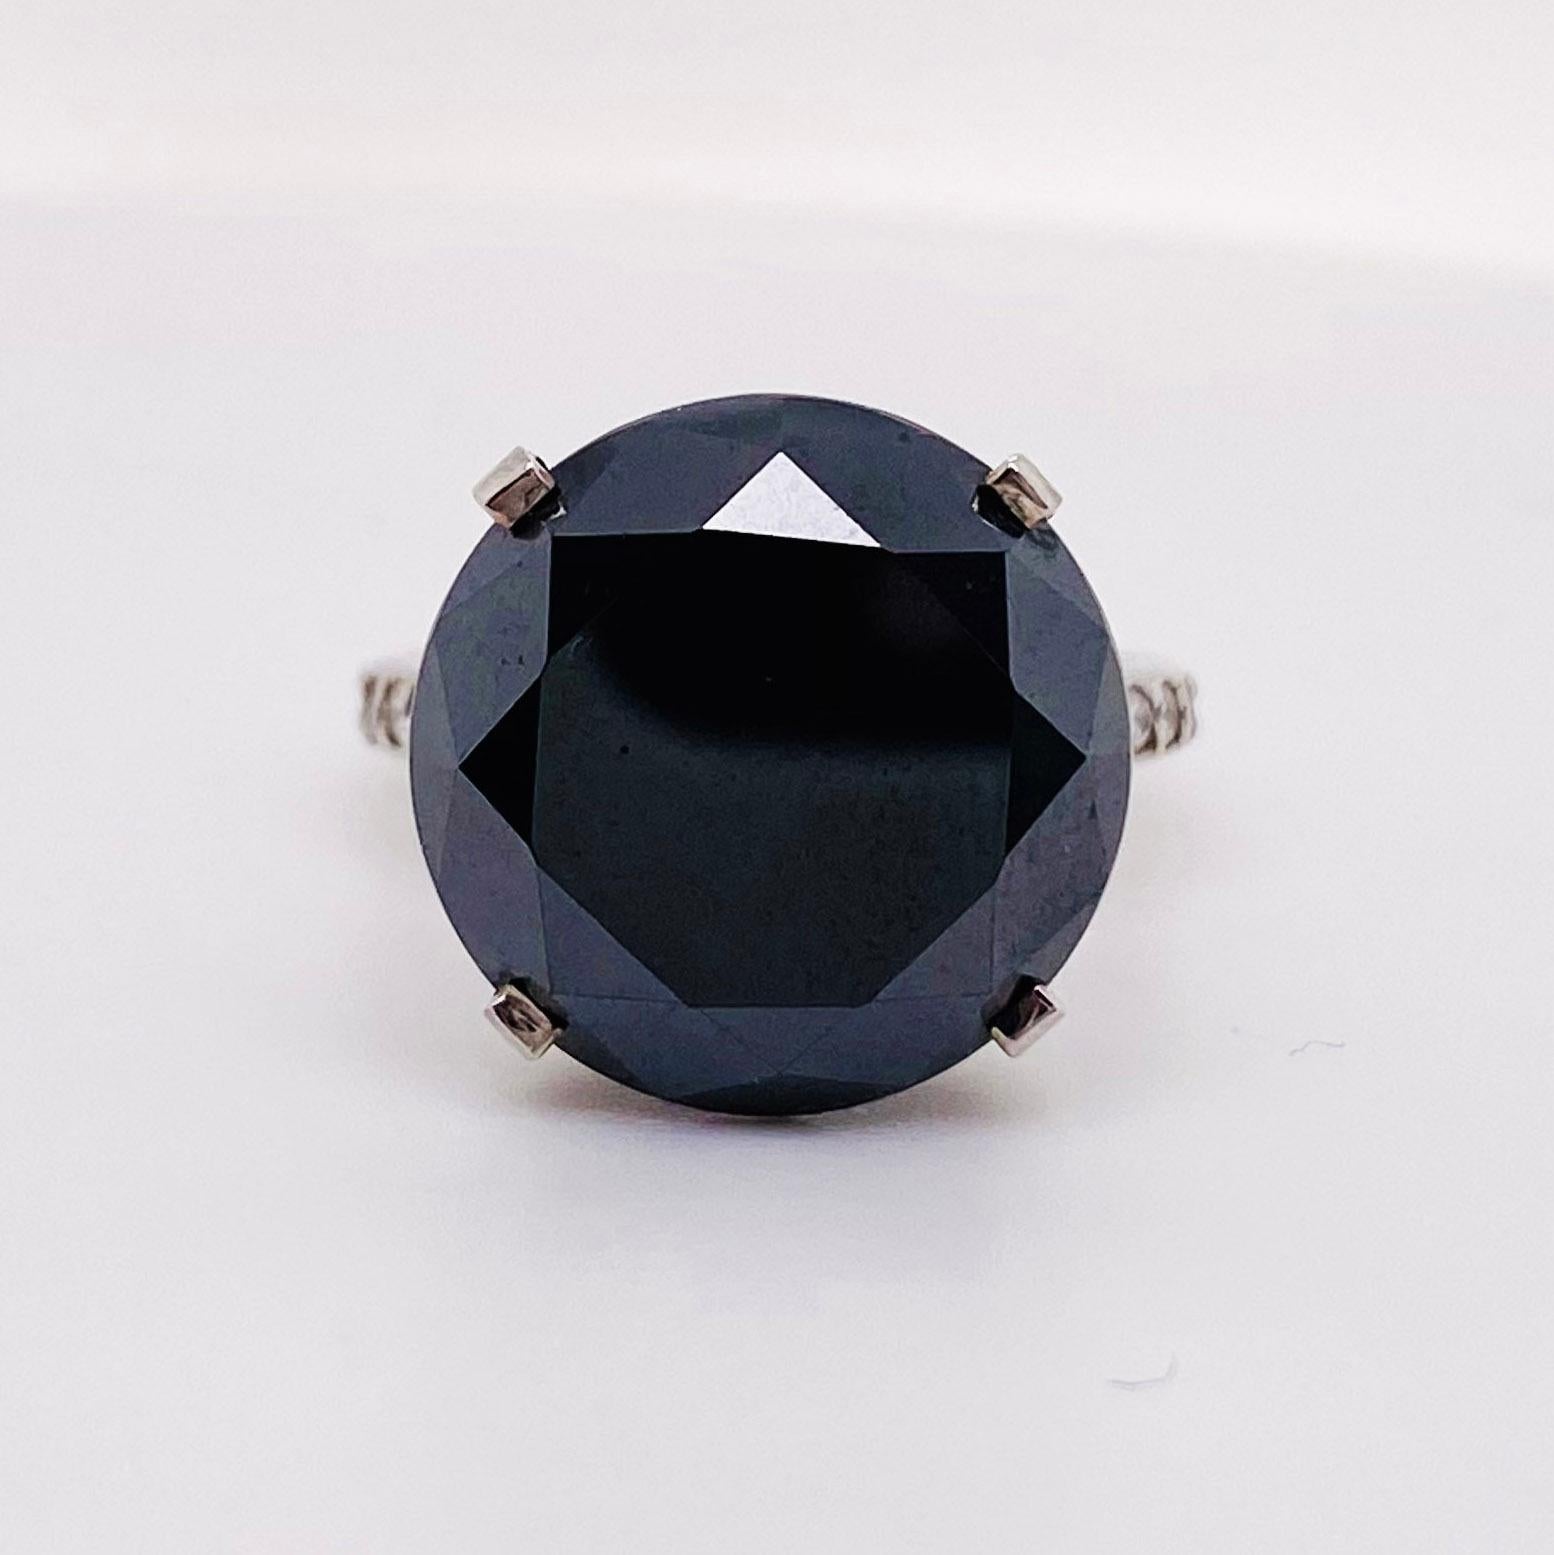 Modern 14.45 Carat Black Diamond Ring, White Gold Diamond Band and Hidden Halo